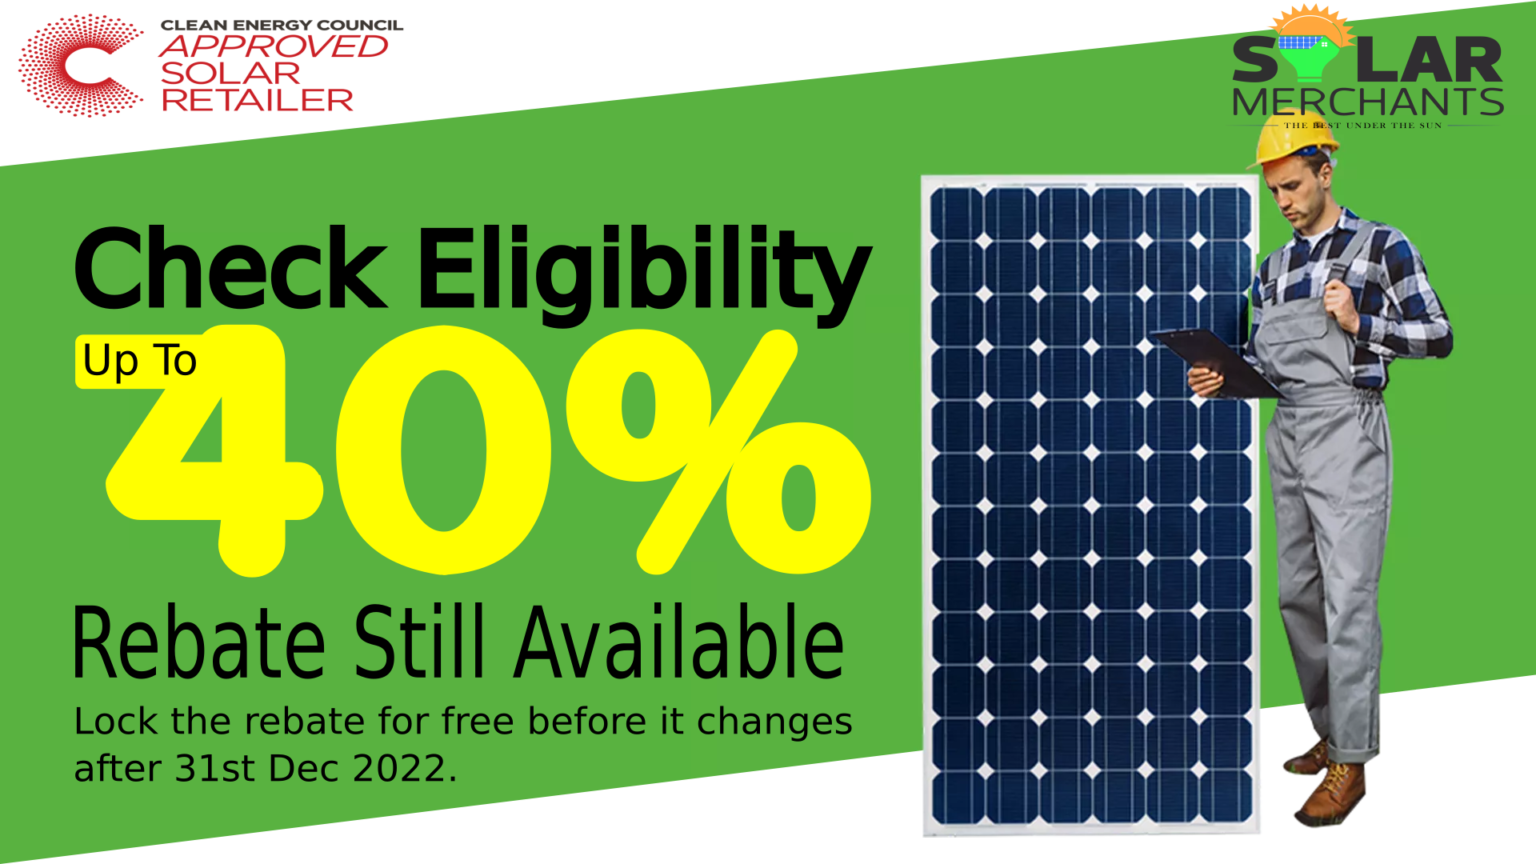 Check Rebate Eligibility For Up To 40 Solar Merchants Australia’s